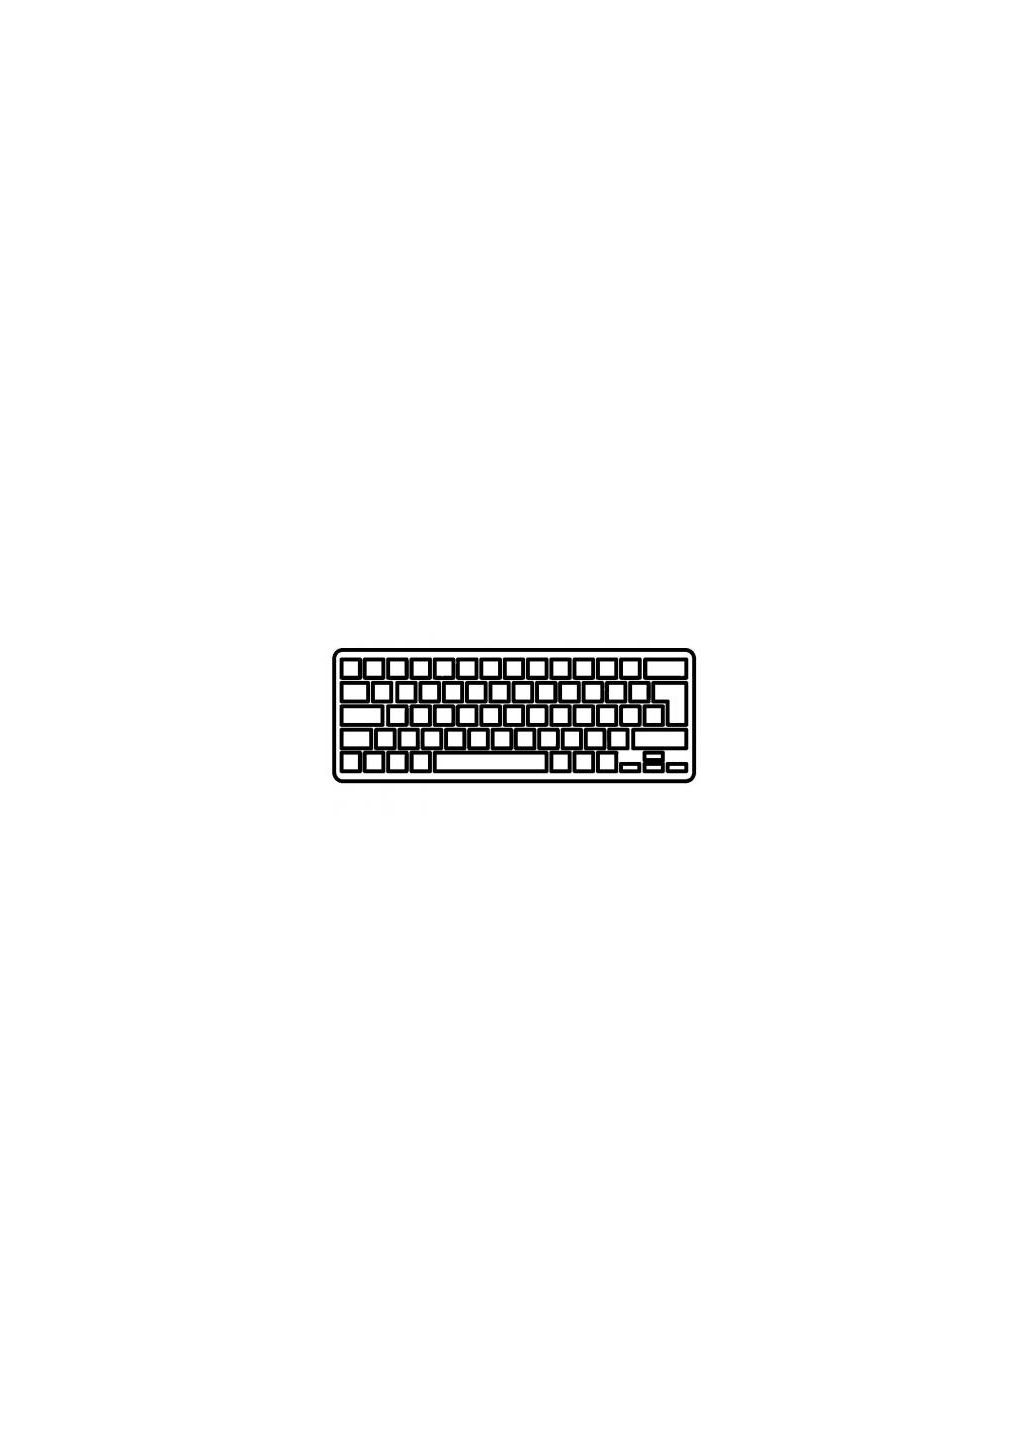 Клавиатура ноутбука (A43400) Asus eee pc 1000h/1000не белая с белой рамкой ua (276707870)